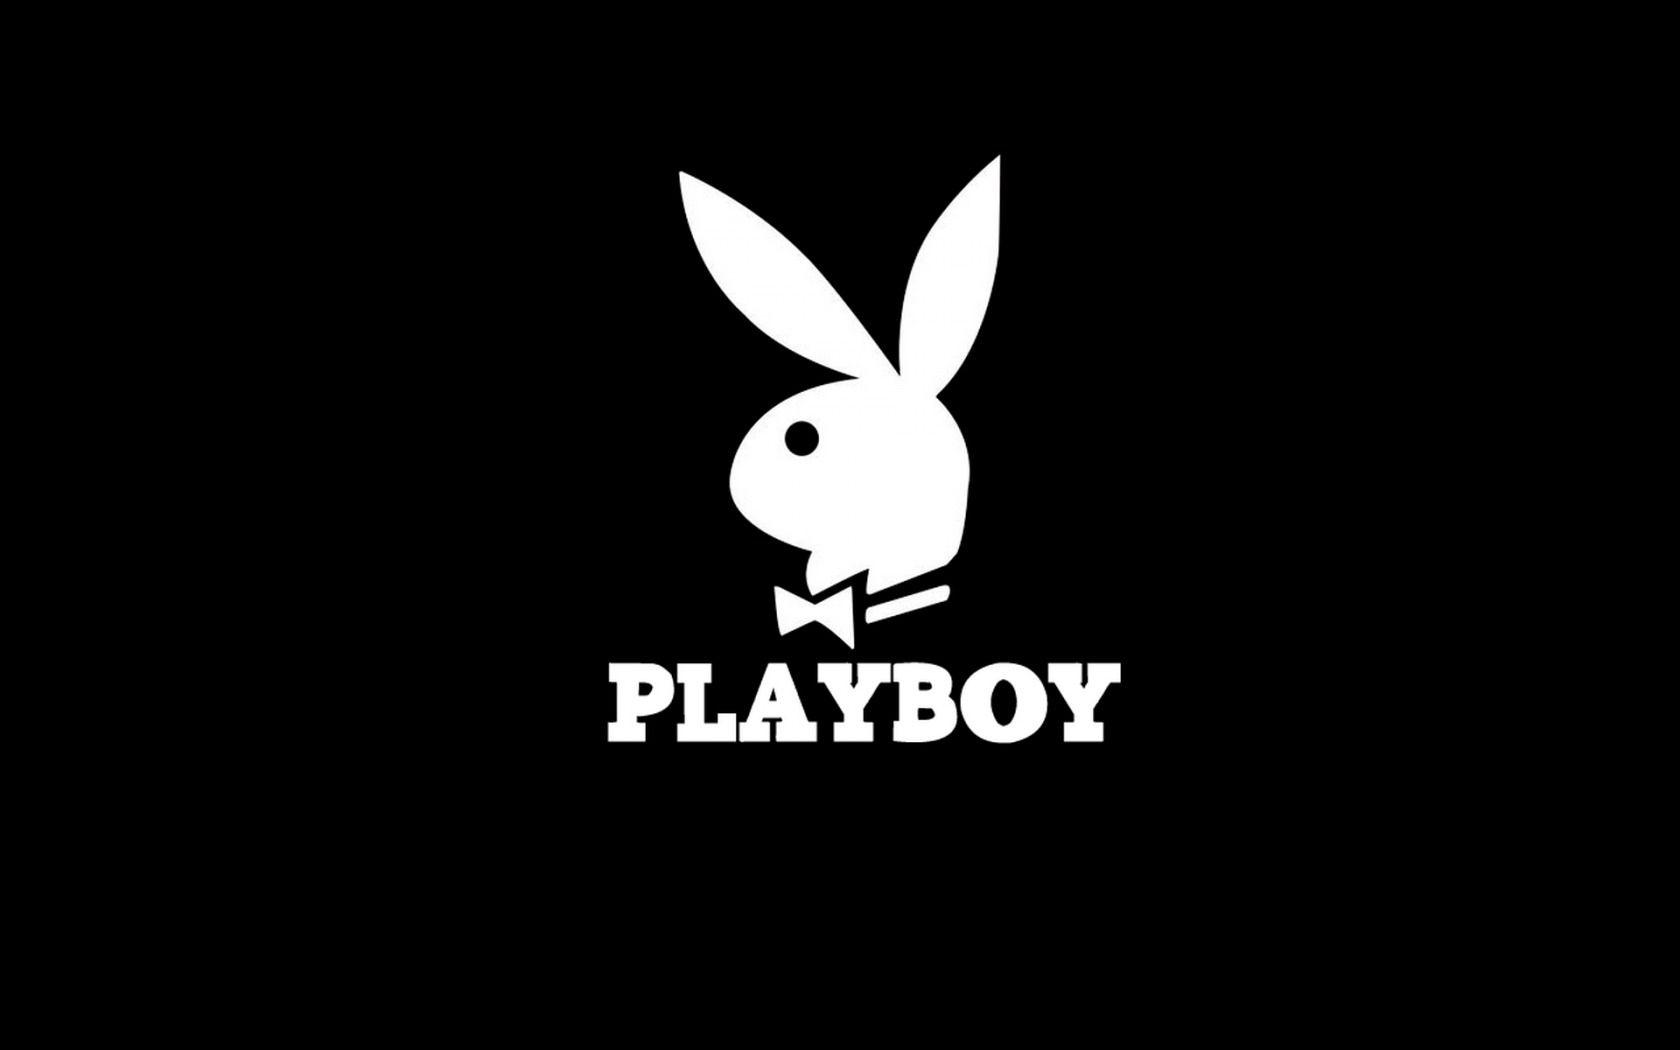 Playboy logo Wallpaper Brands Other Wallpaper in jpg format